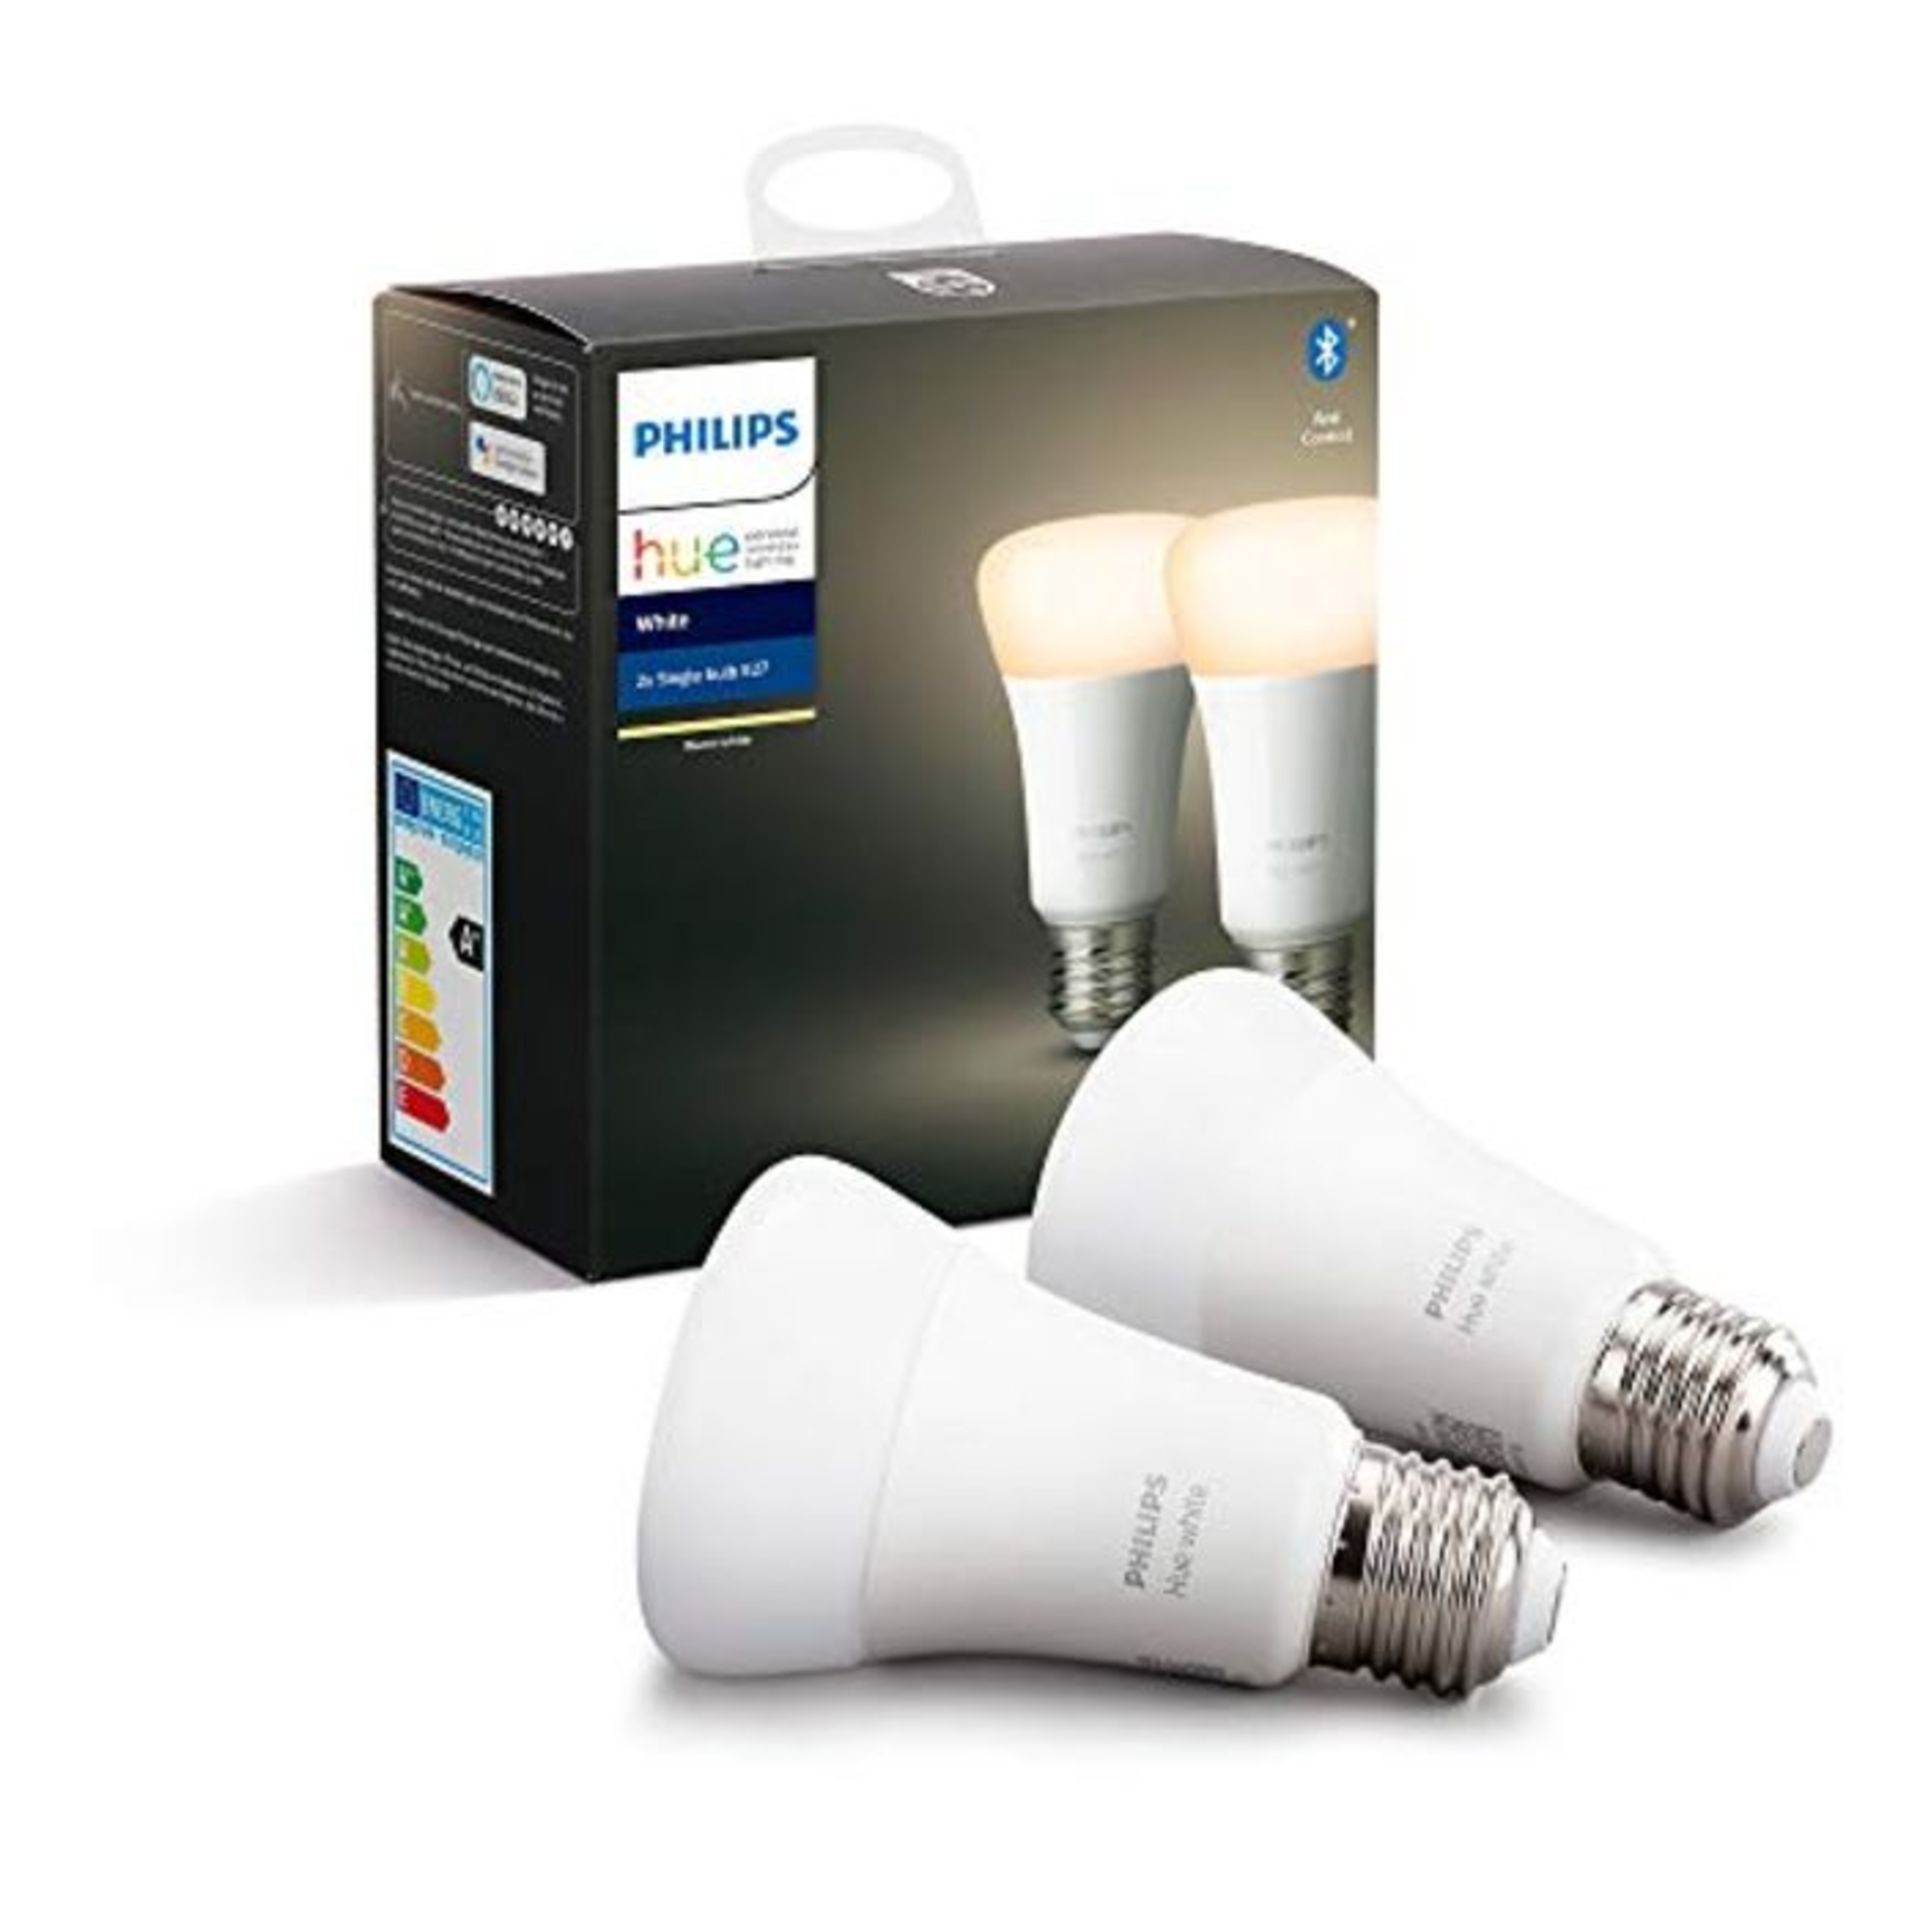 Philips Hue White E27 LED Lampe Doppelpack, dimmbar, warmweiÃxes Licht, steuerbar vi